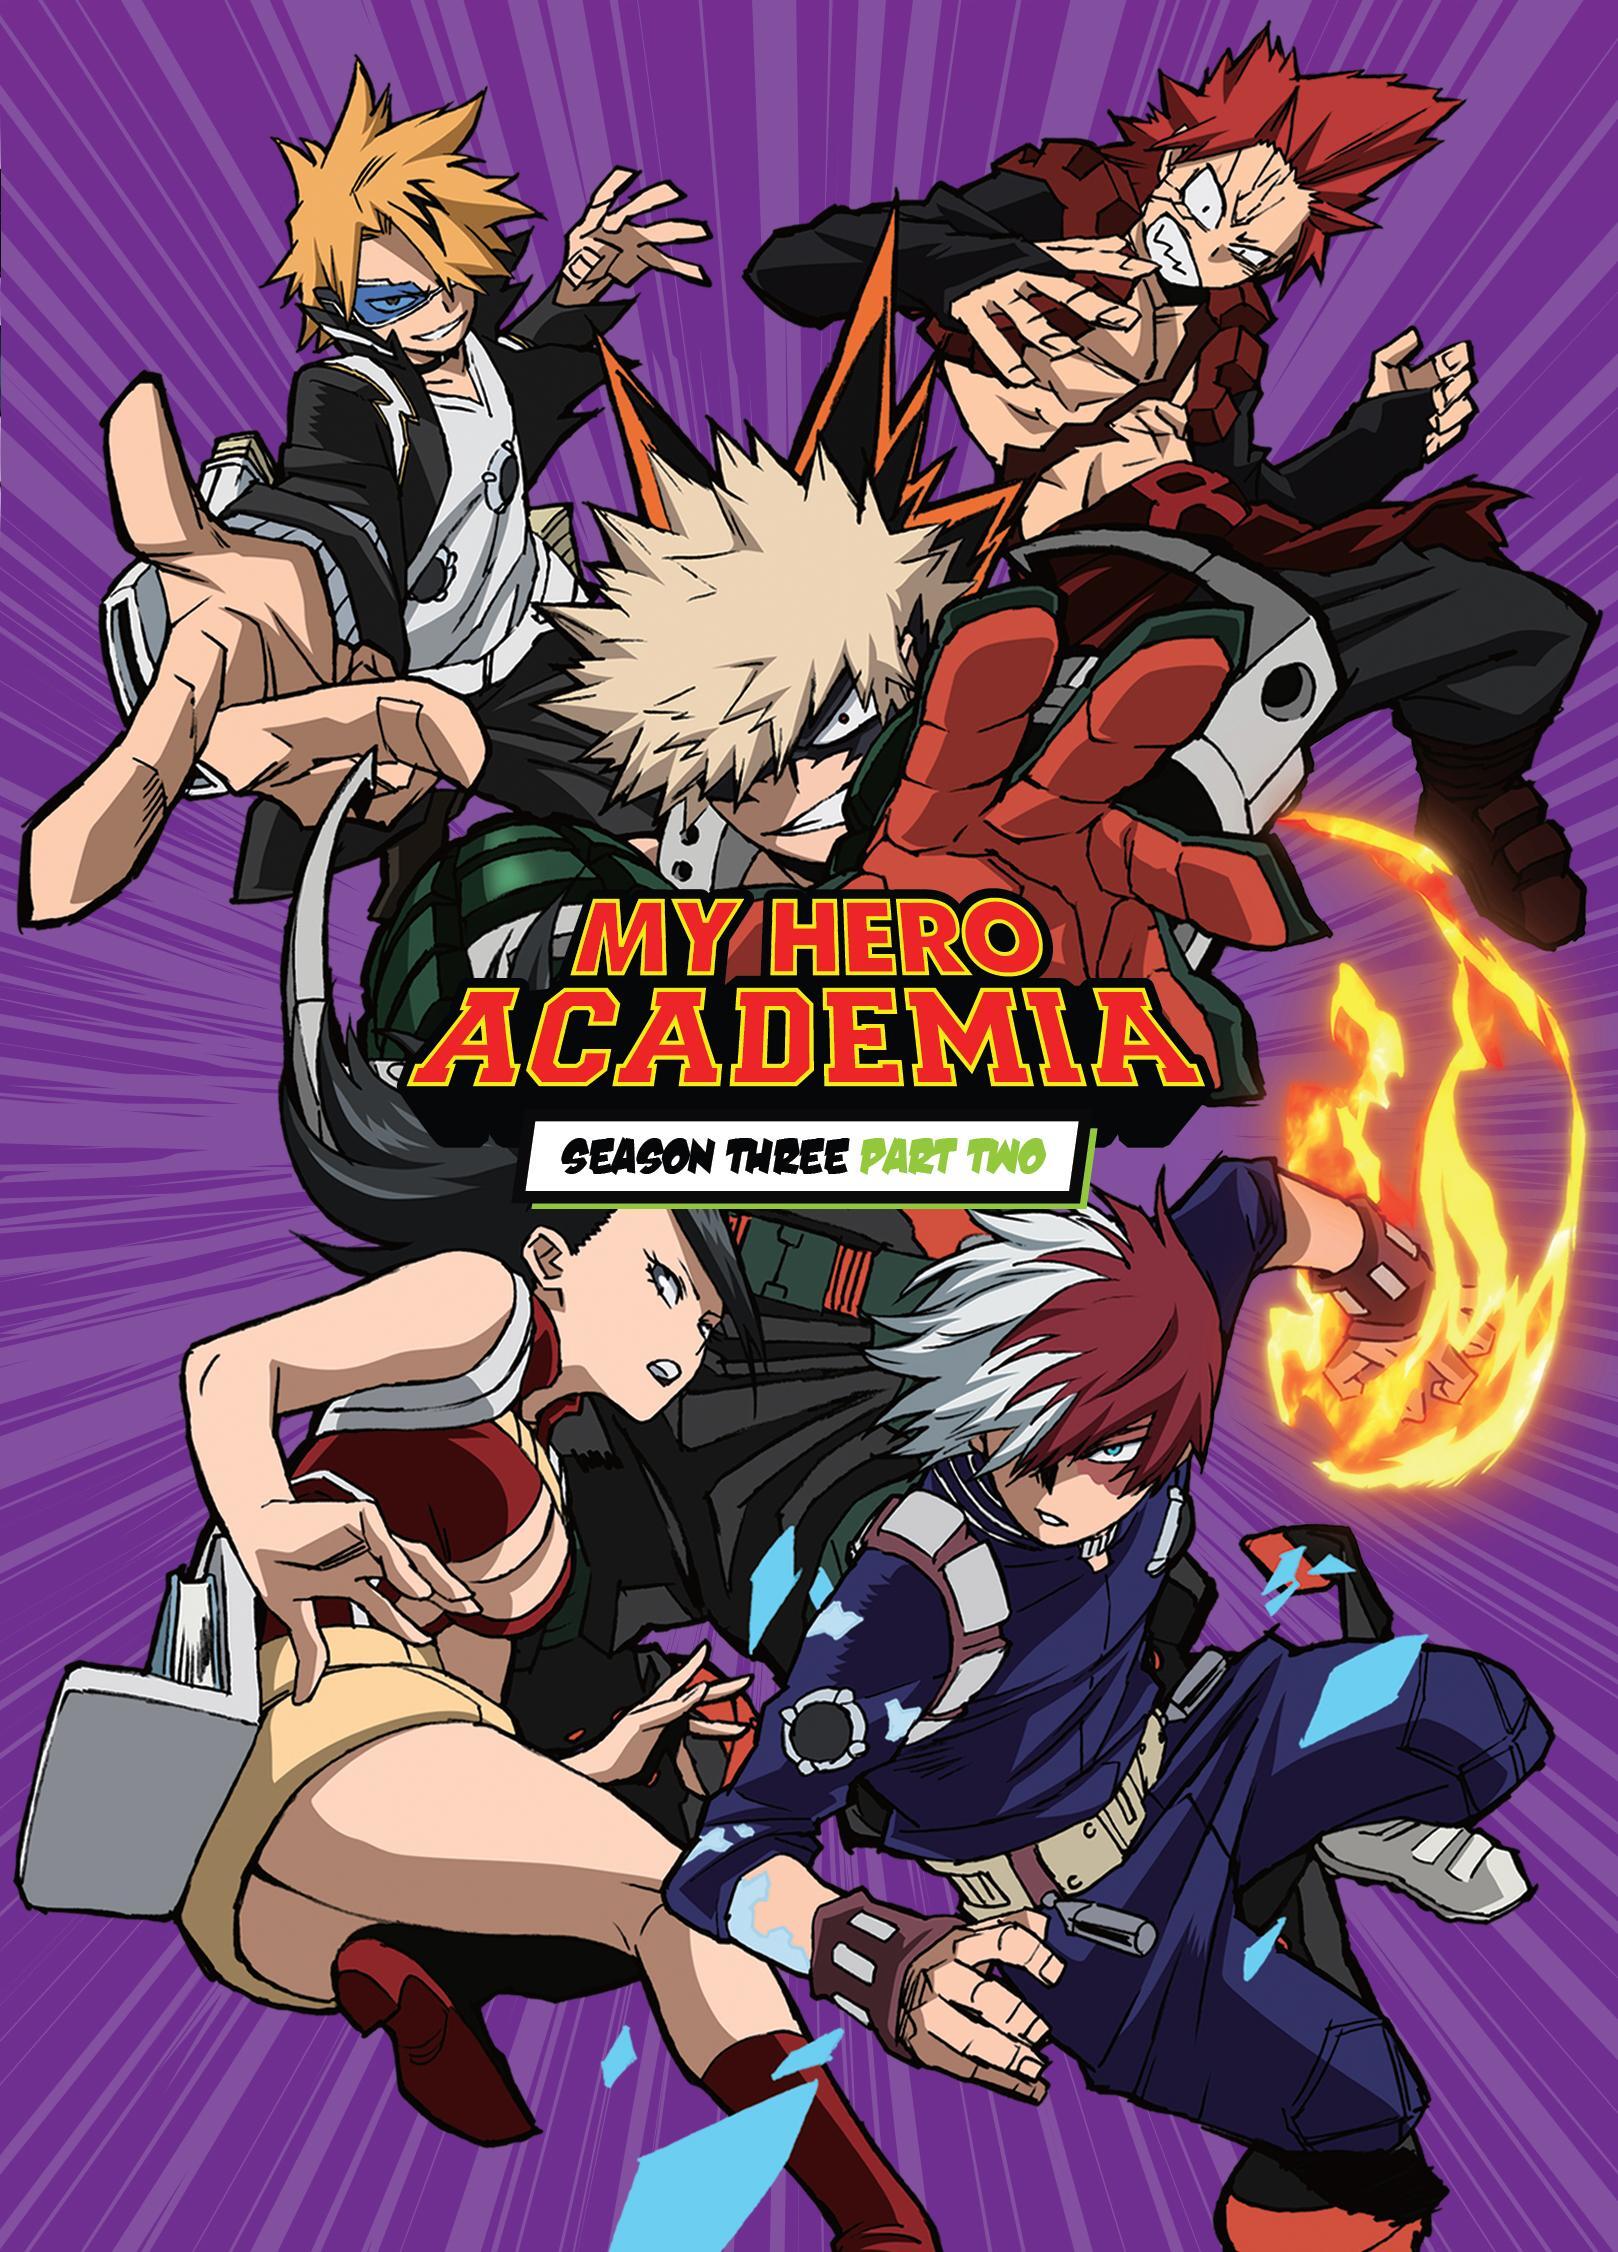 My Hero Academia: Season Three, Part Two - DVD [ 2018 ]  - Anime Television On DVD - TV Shows On GRUV